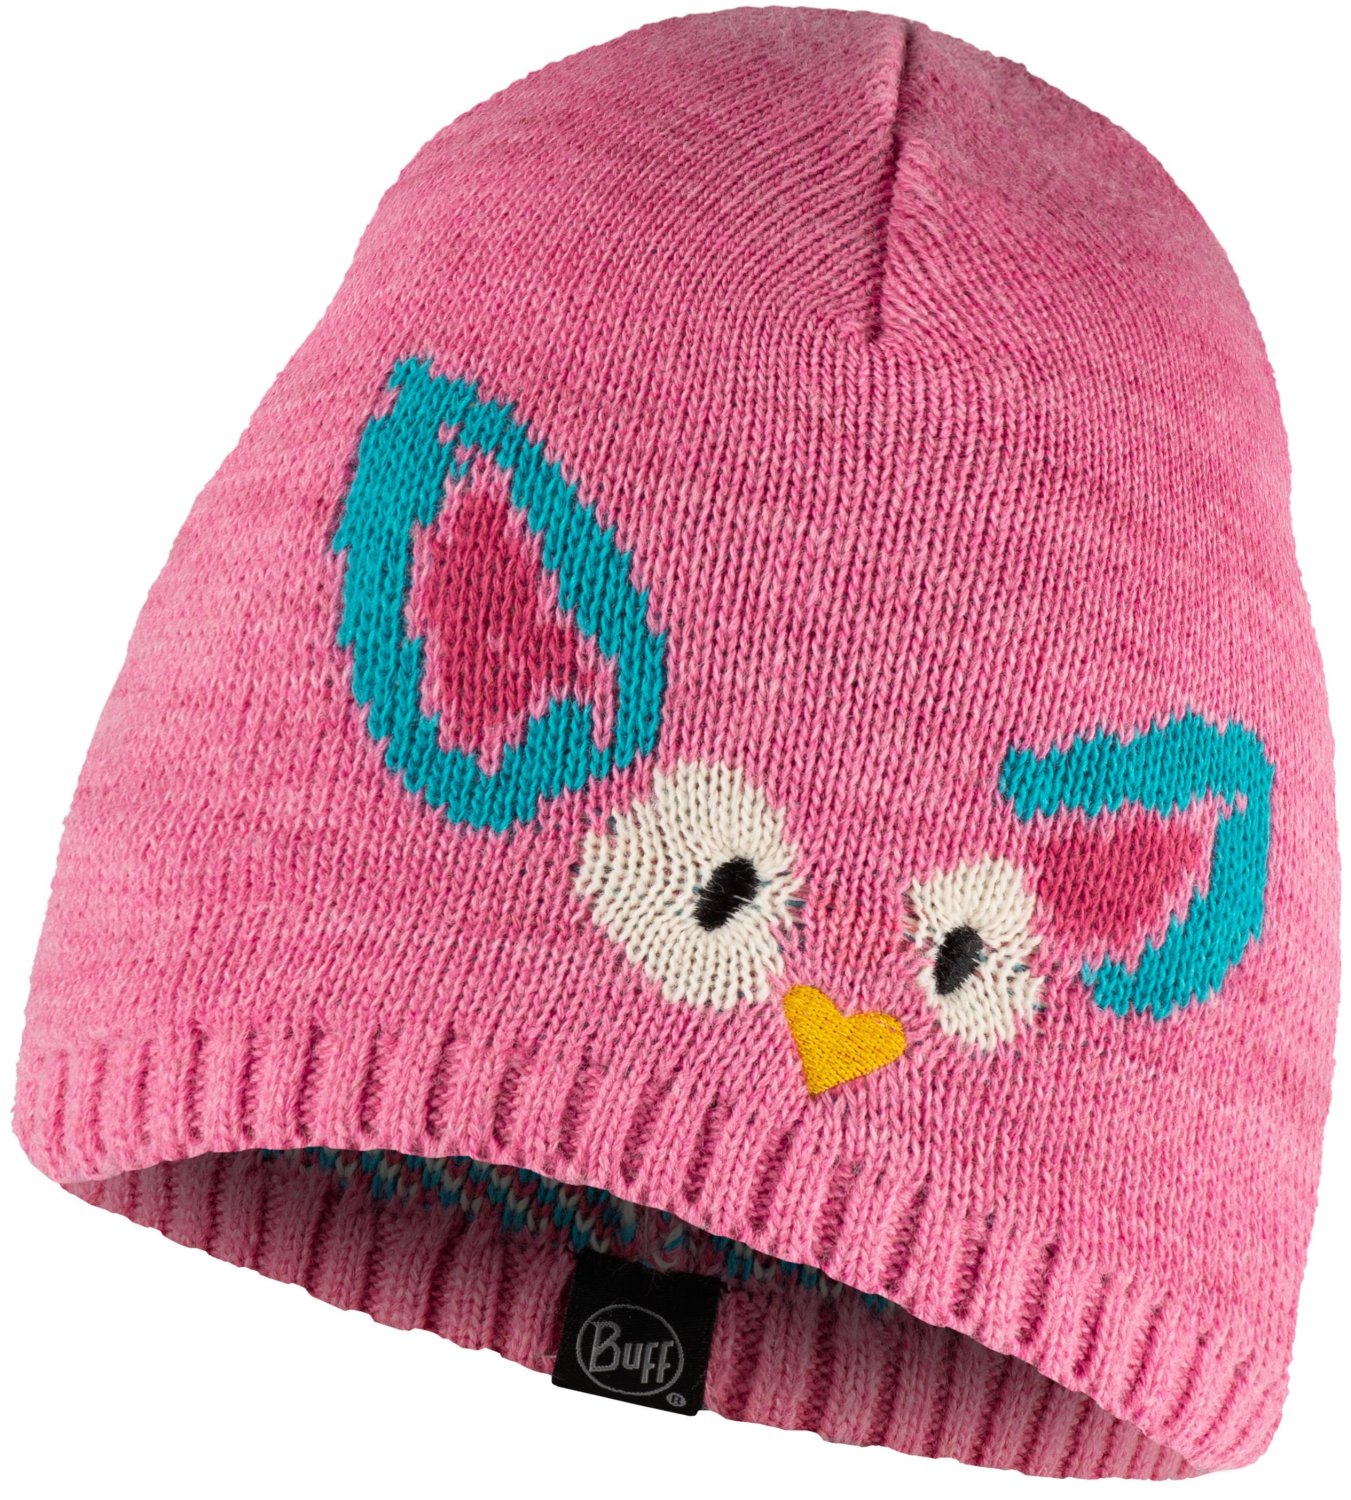 Шапка Buff Knitted Hat Bonky Anita Rosé US:one size, 129626.538.10.00 шапка buff knitted hat bonky anita rosé us one size 129626 538 10 00